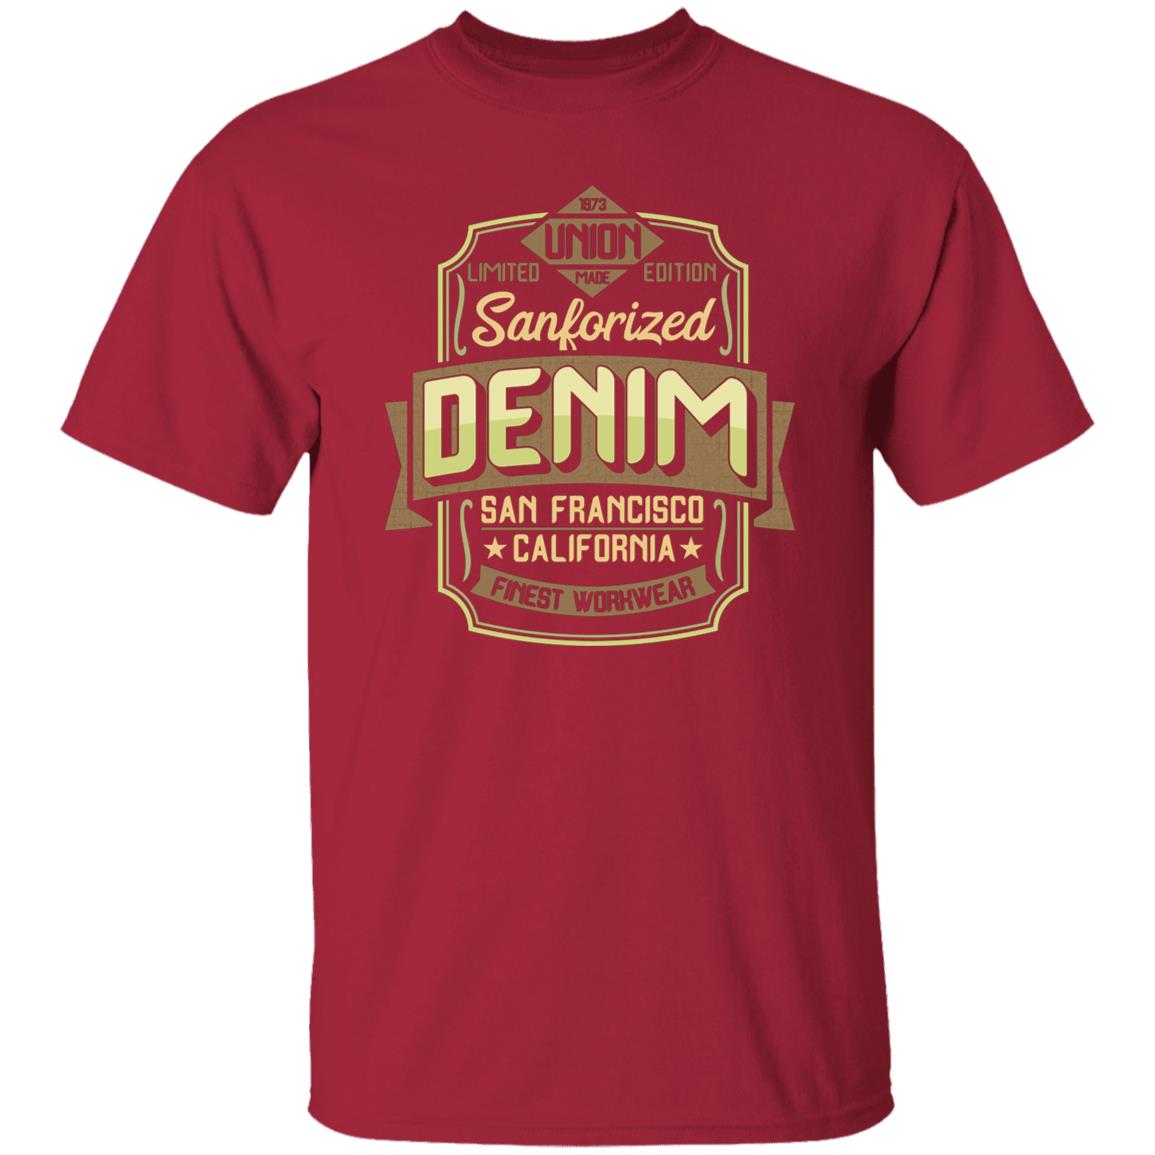 Limited Edition Sanforized Denim T-Shirt